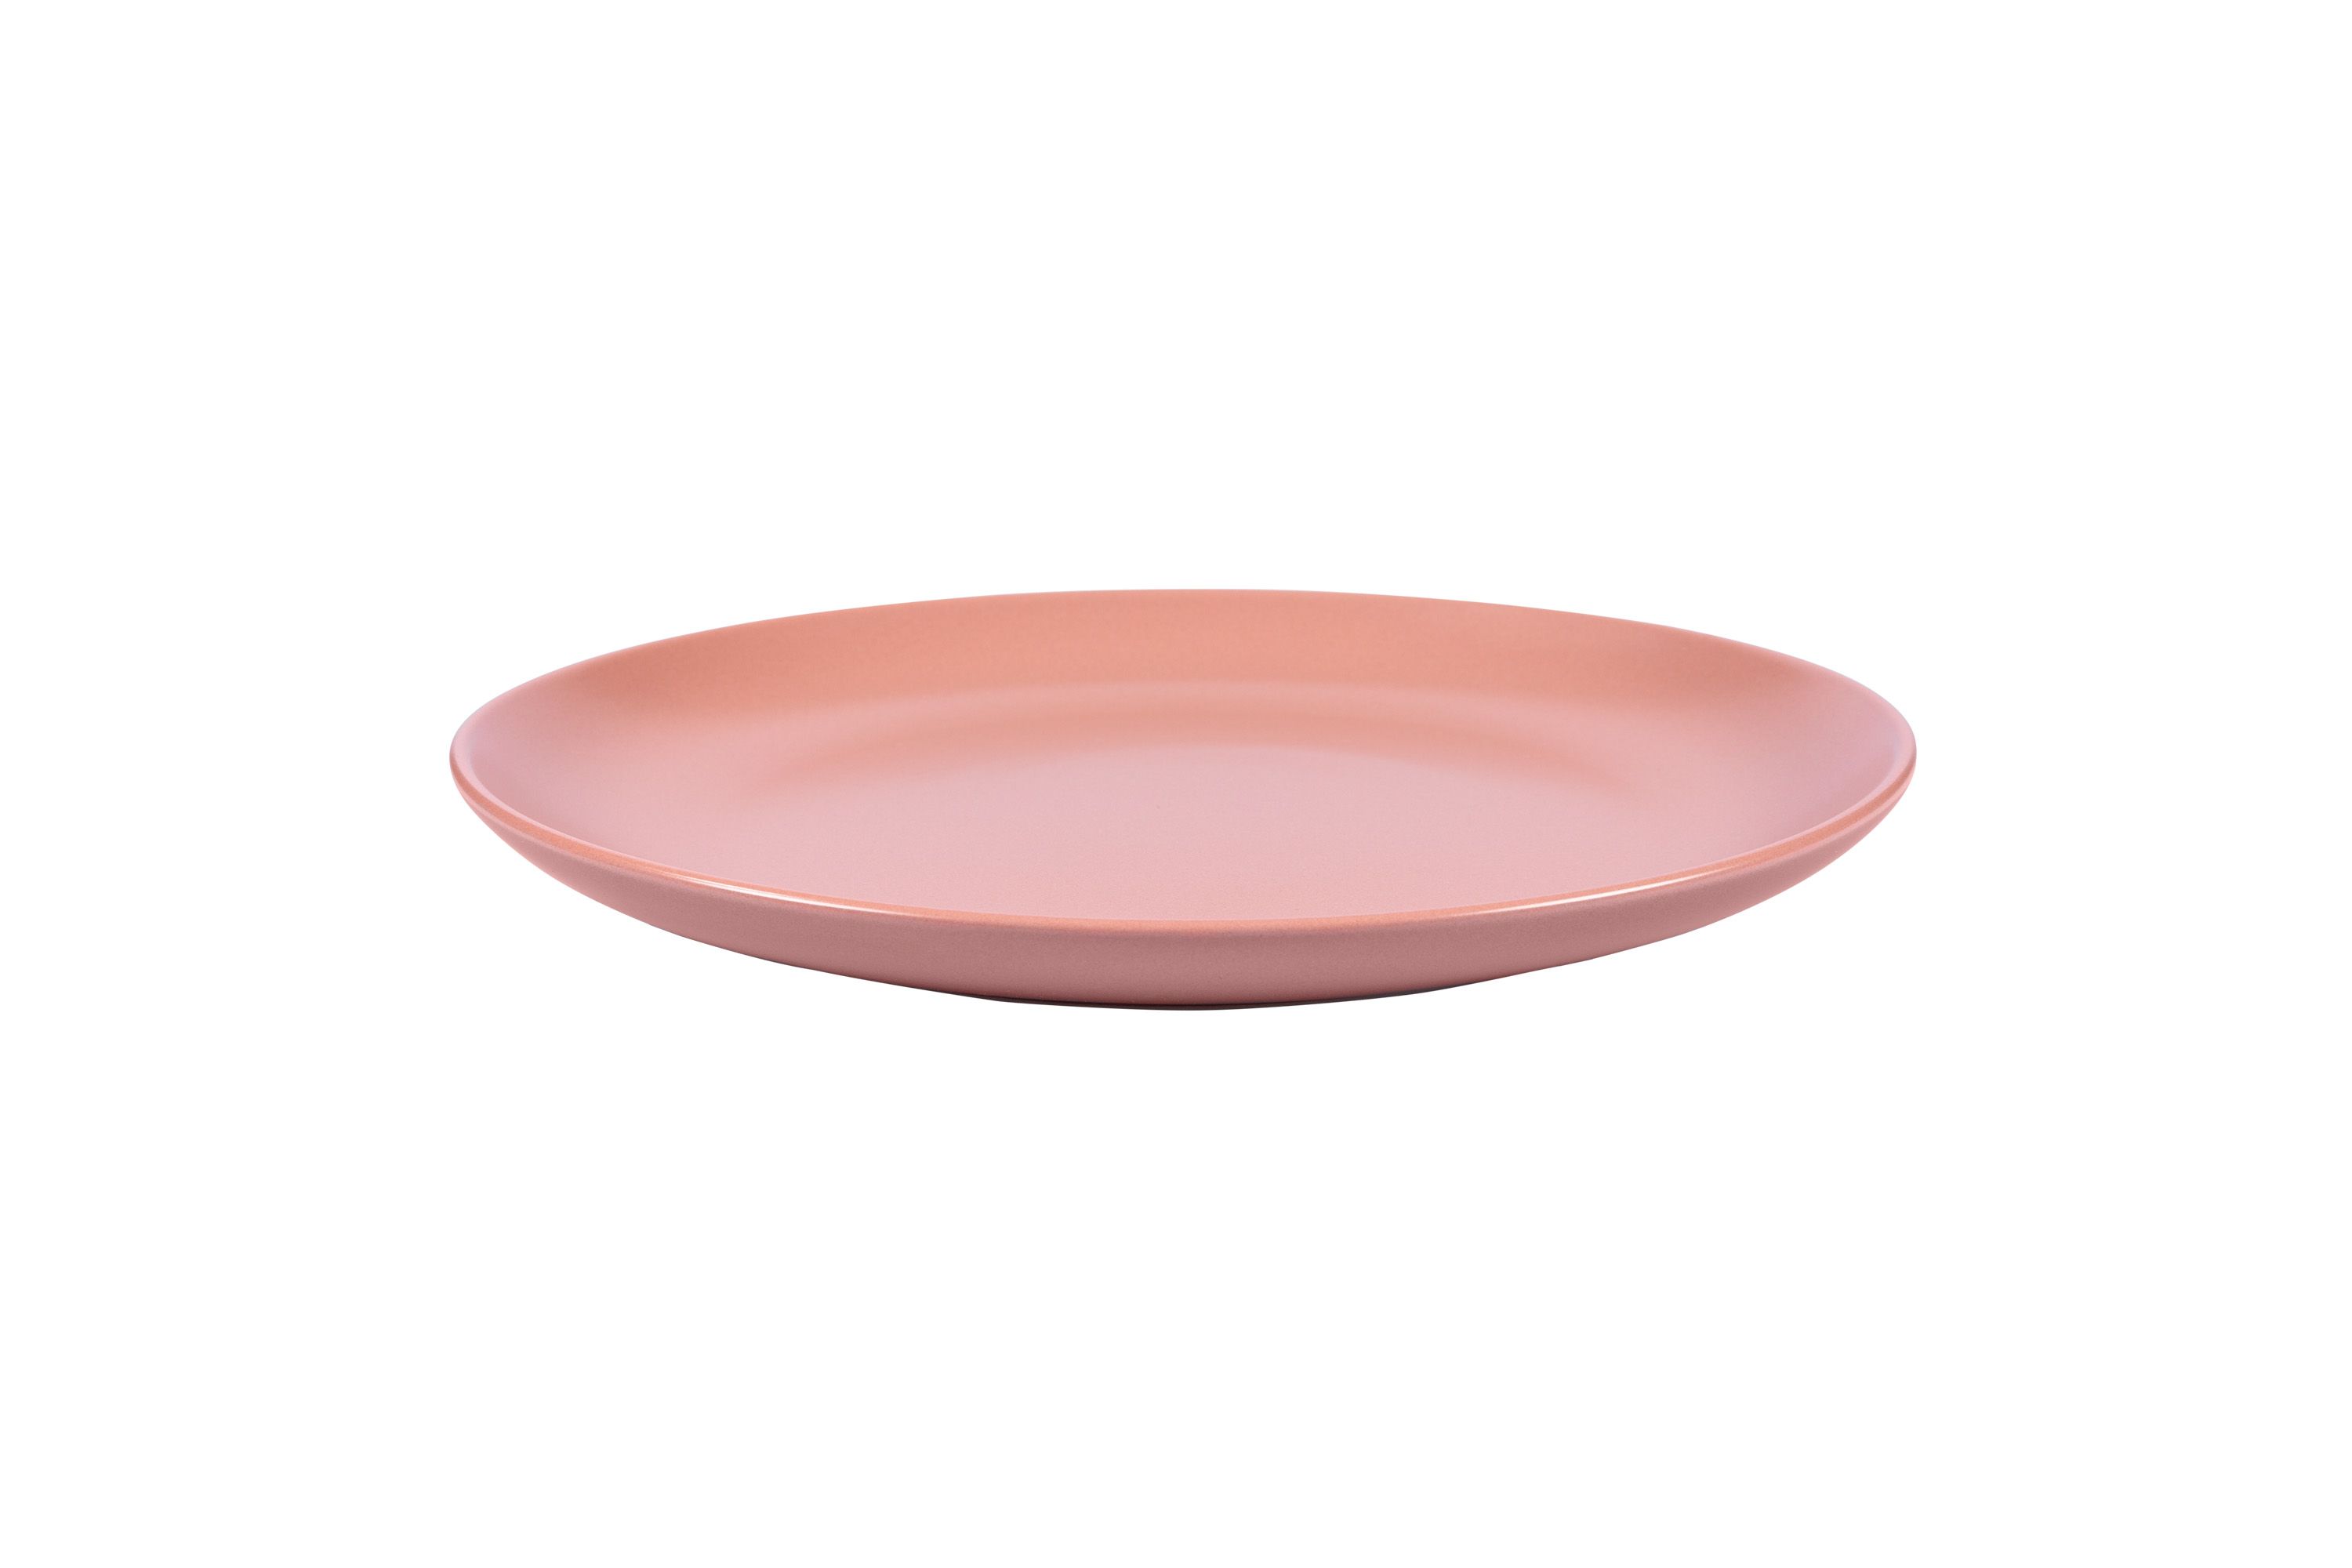 Ein rosa Stoneware-Teller